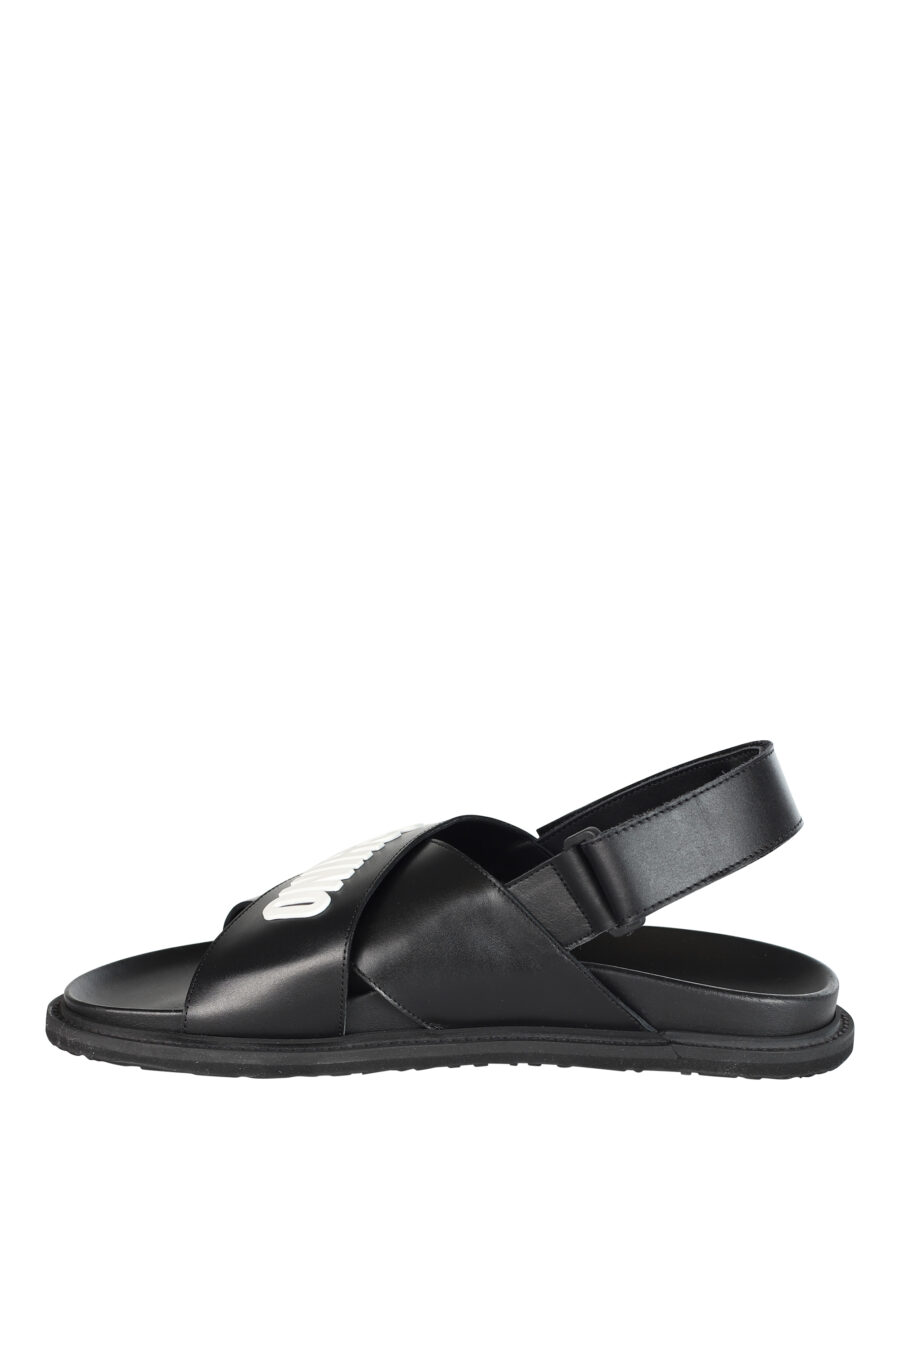 Black crossed sandals with white maxilogo - 8059022514769 3